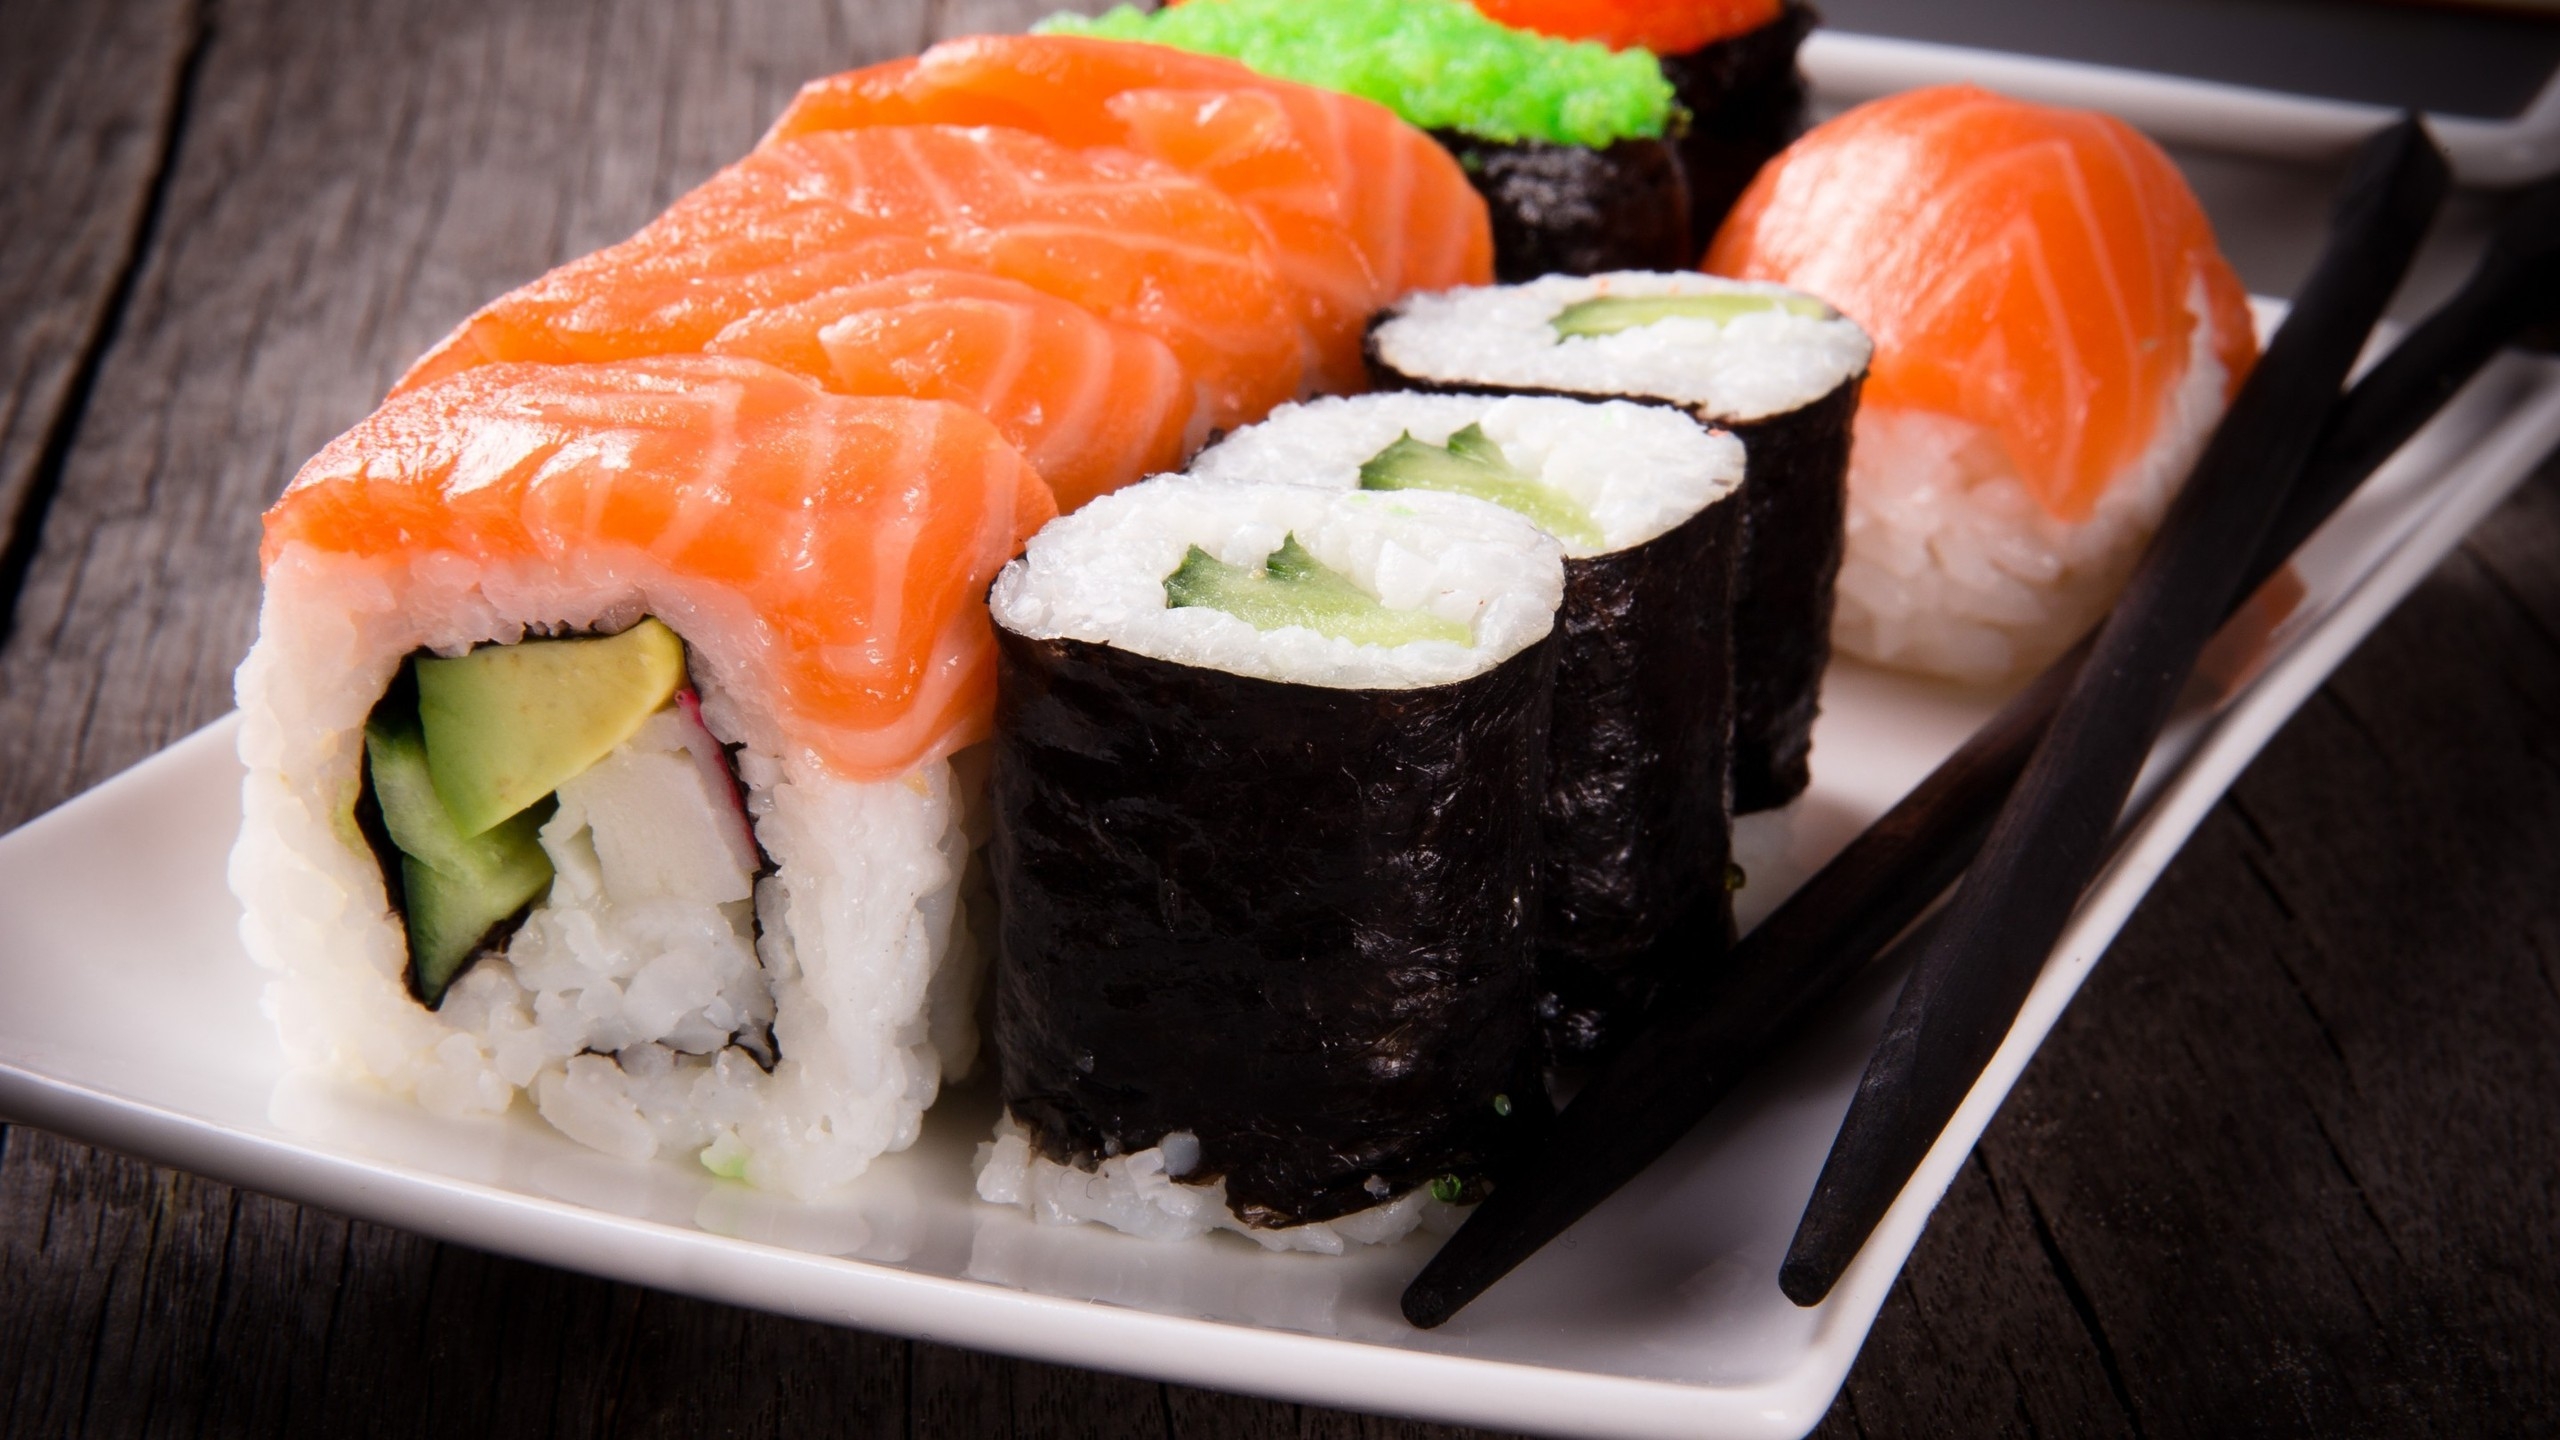 Sushi Rolls for 2560x1440 HDTV resolution